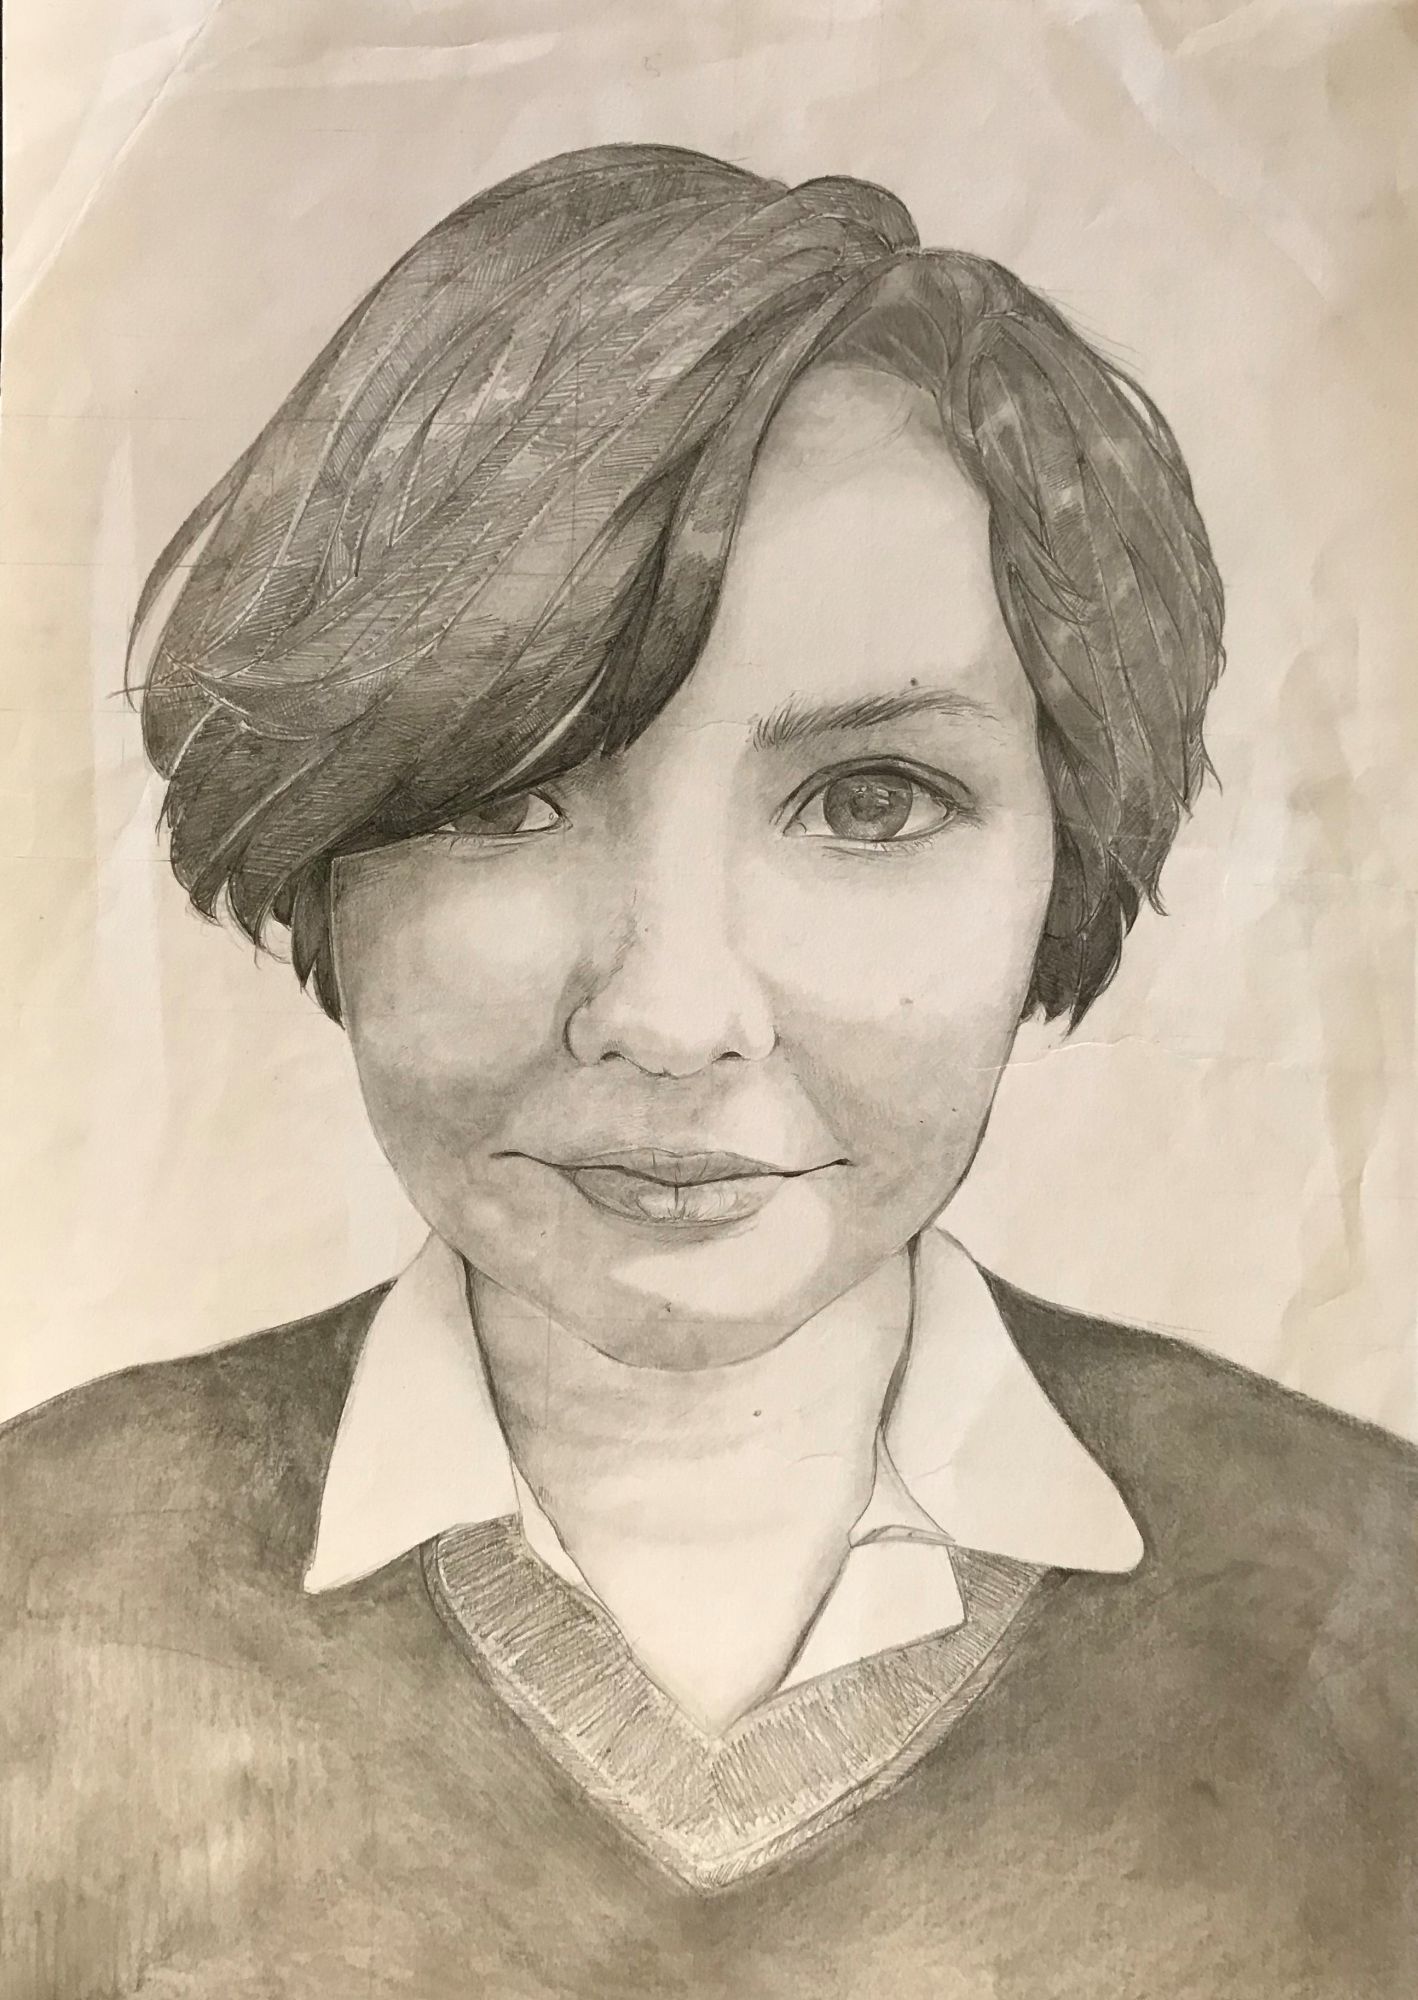 Student artwork - Self Portrait